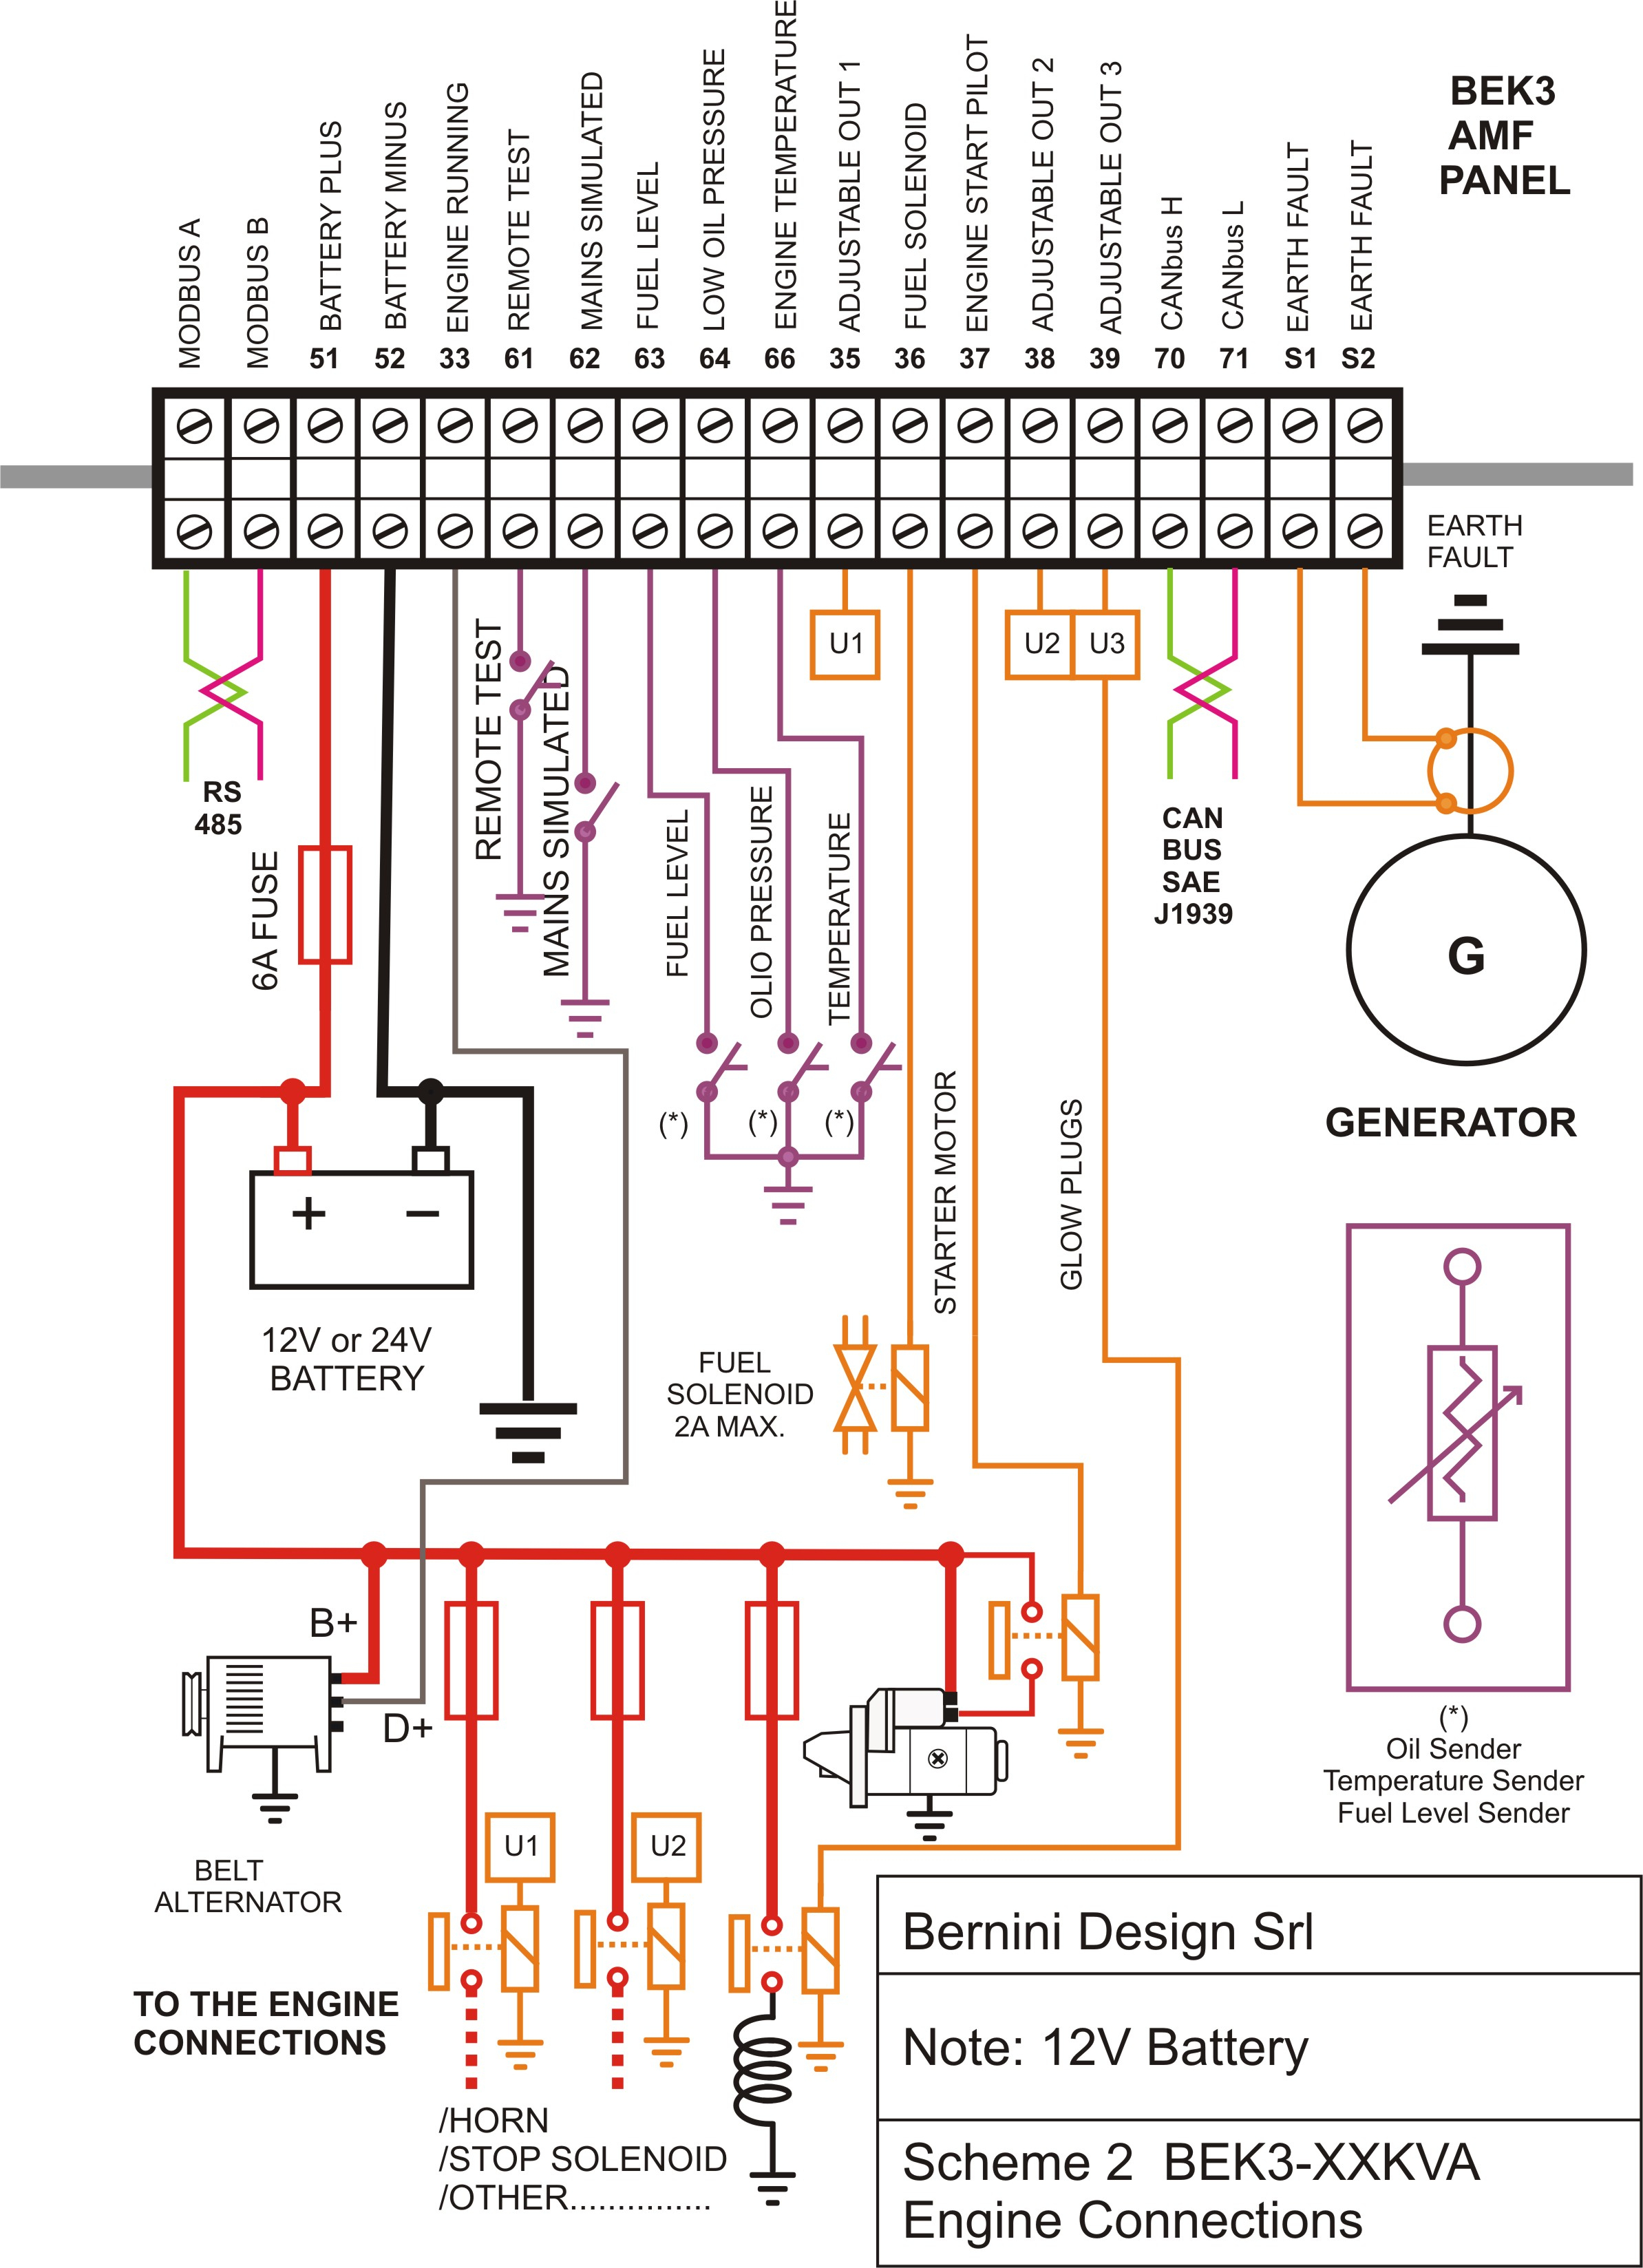 Generator Ats Wiring Diagram - Wiring Diagrams Click - Generator Wiring Diagram